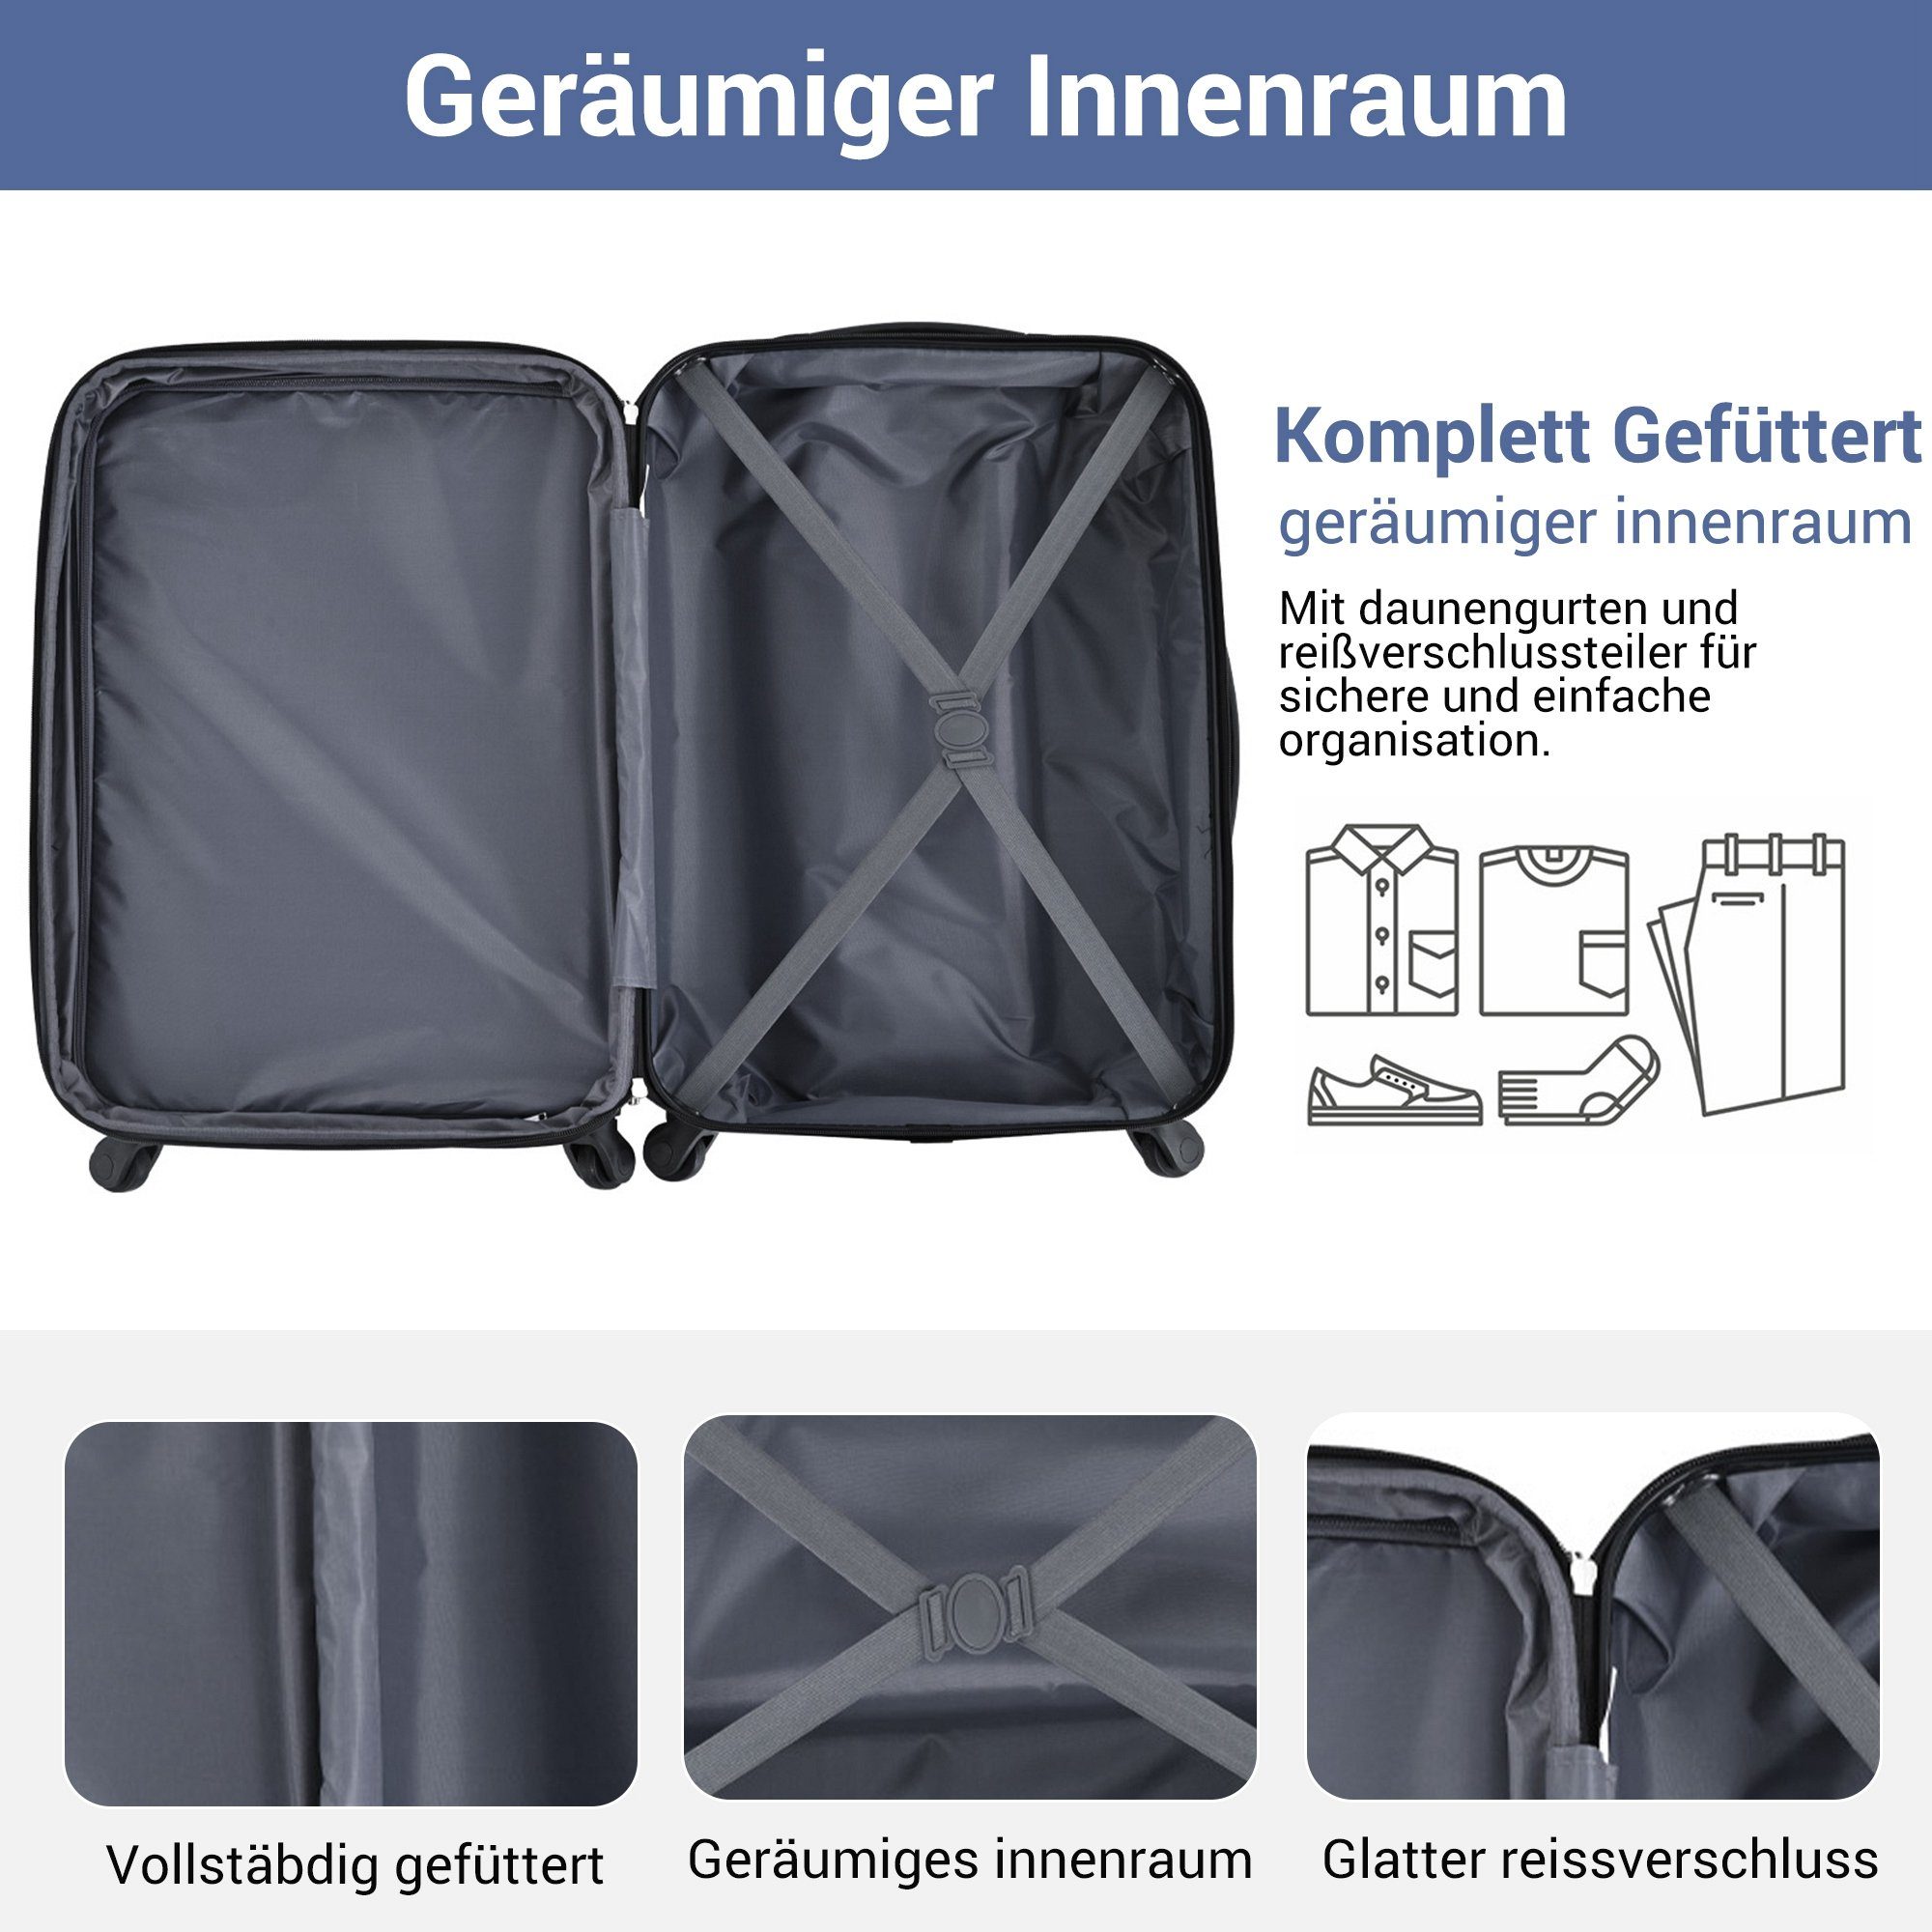 Rollkoffer, :ABS Hauptmaterial Celya Hartschalen-Trolley Hartschalen-Koffer, 57×35×23cm, Reisekoffer, Dunkelblau